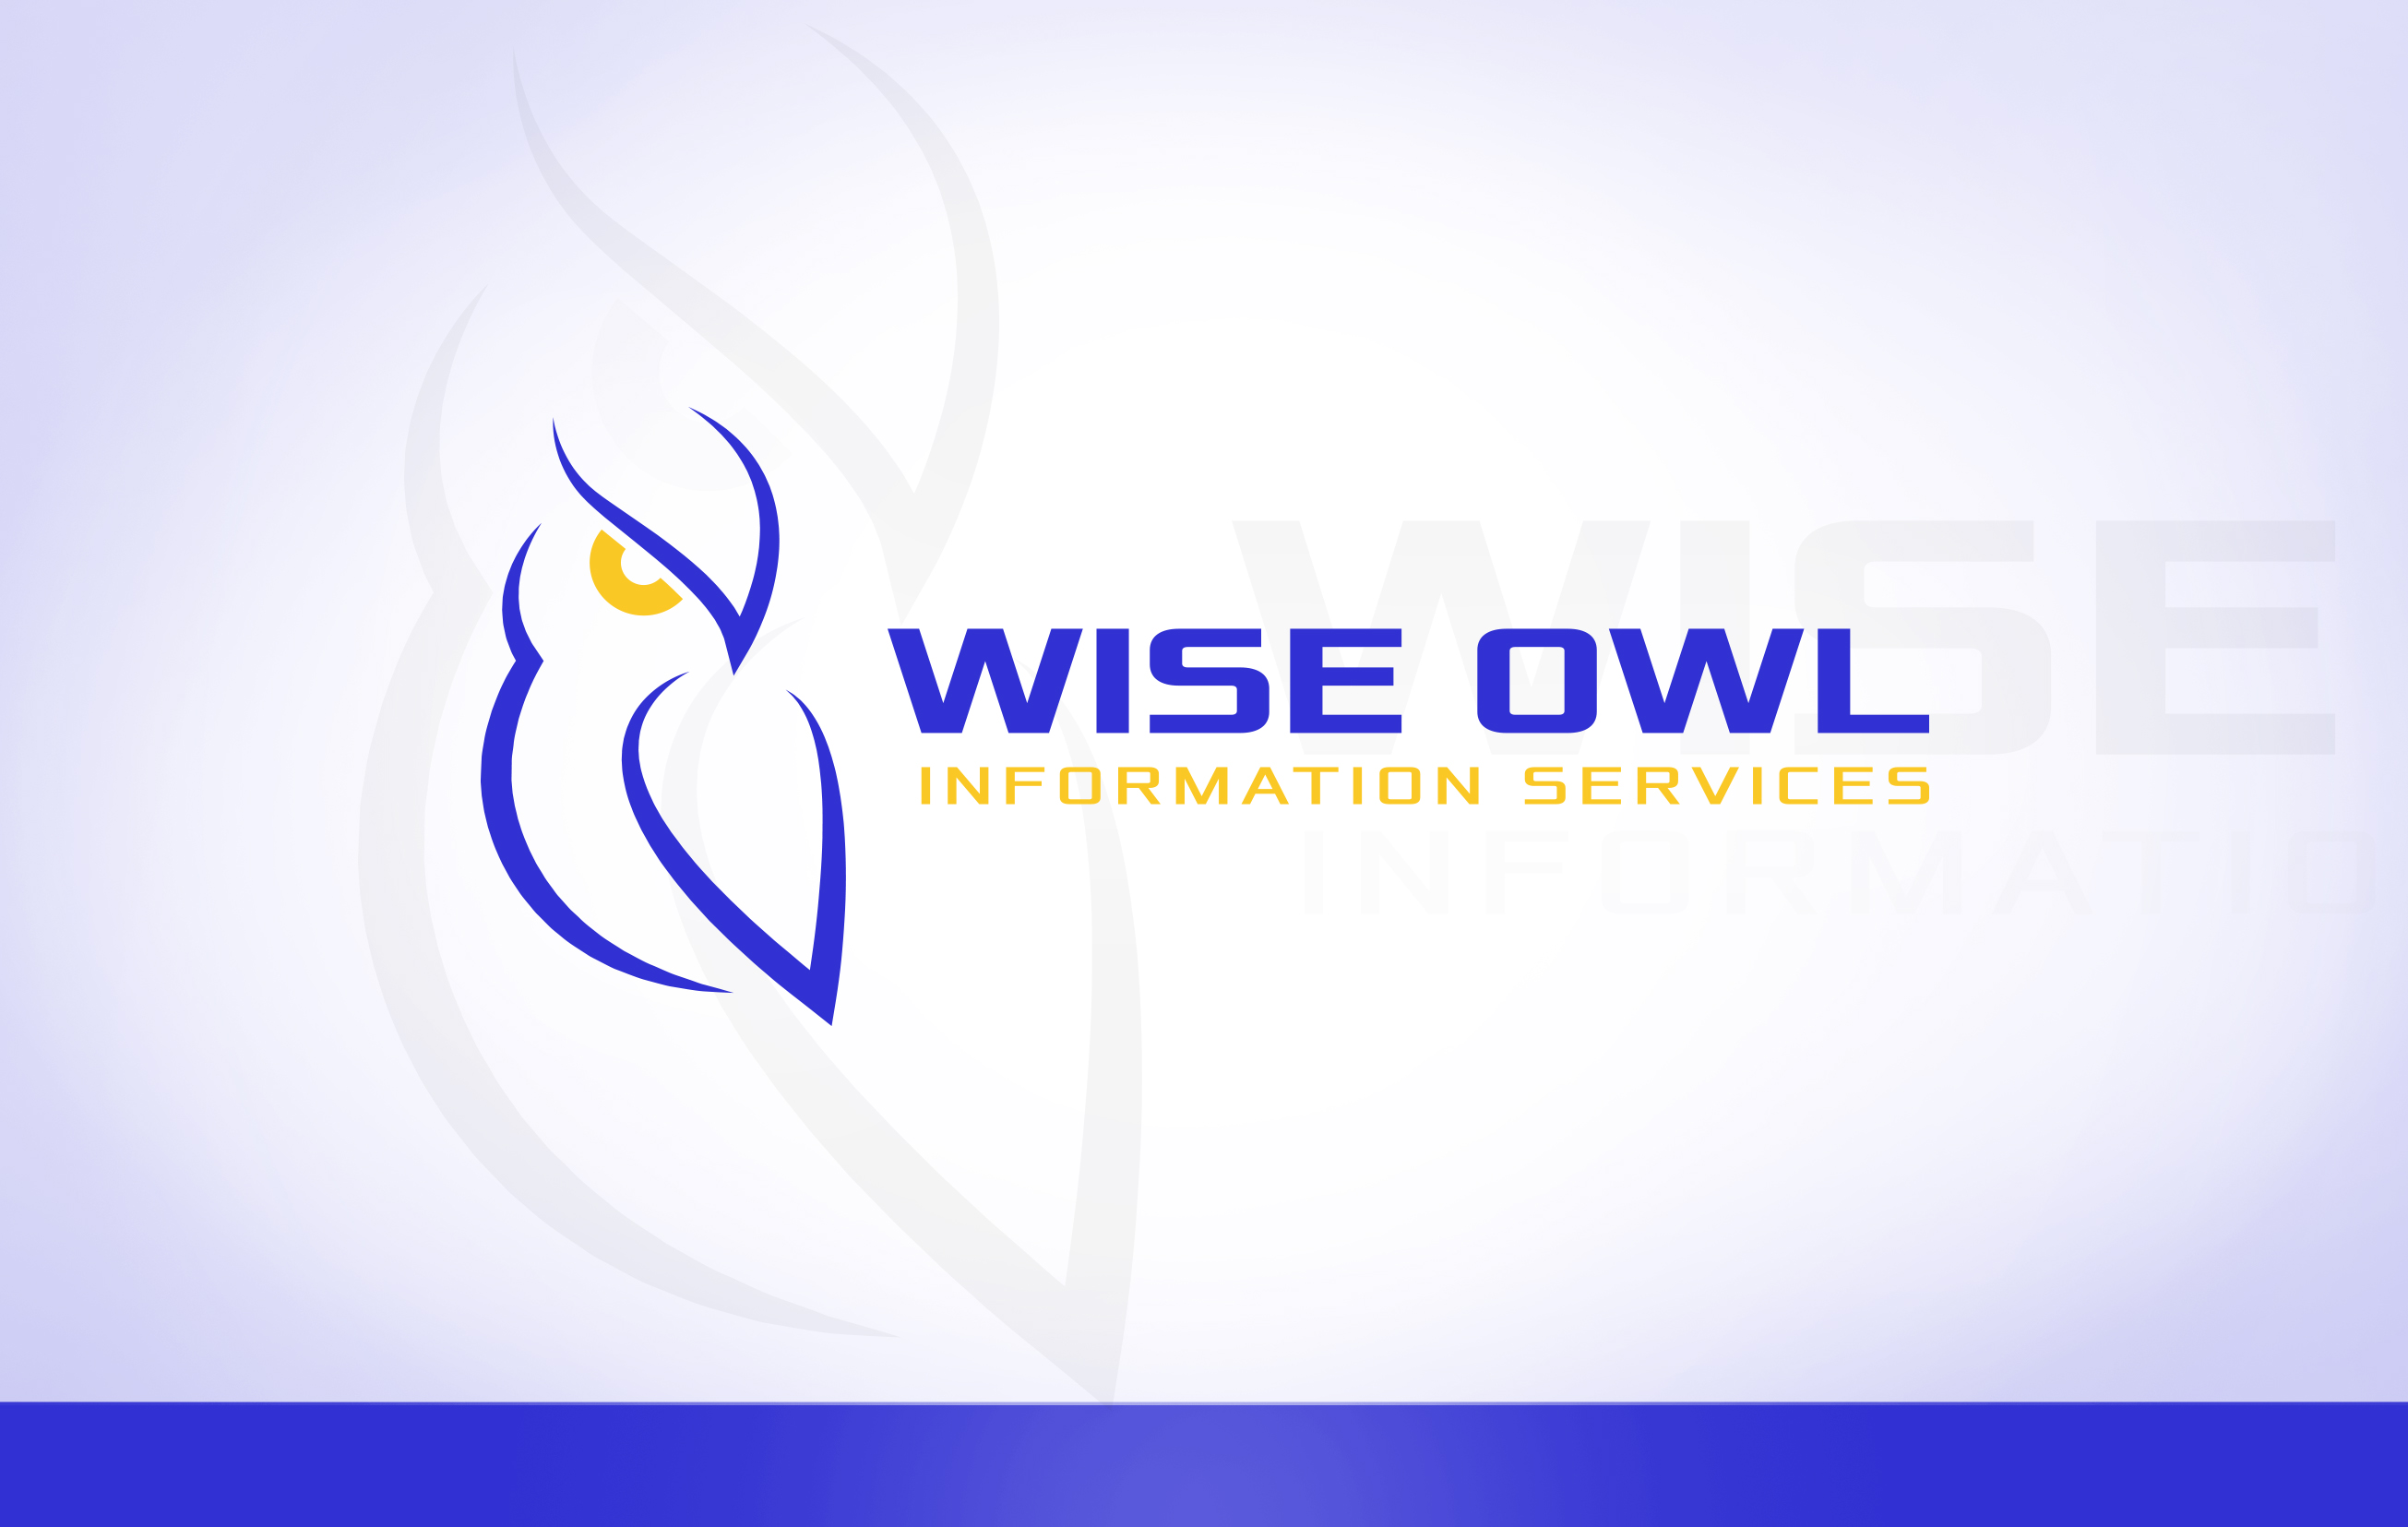 Wise Owl Information Services Design #1